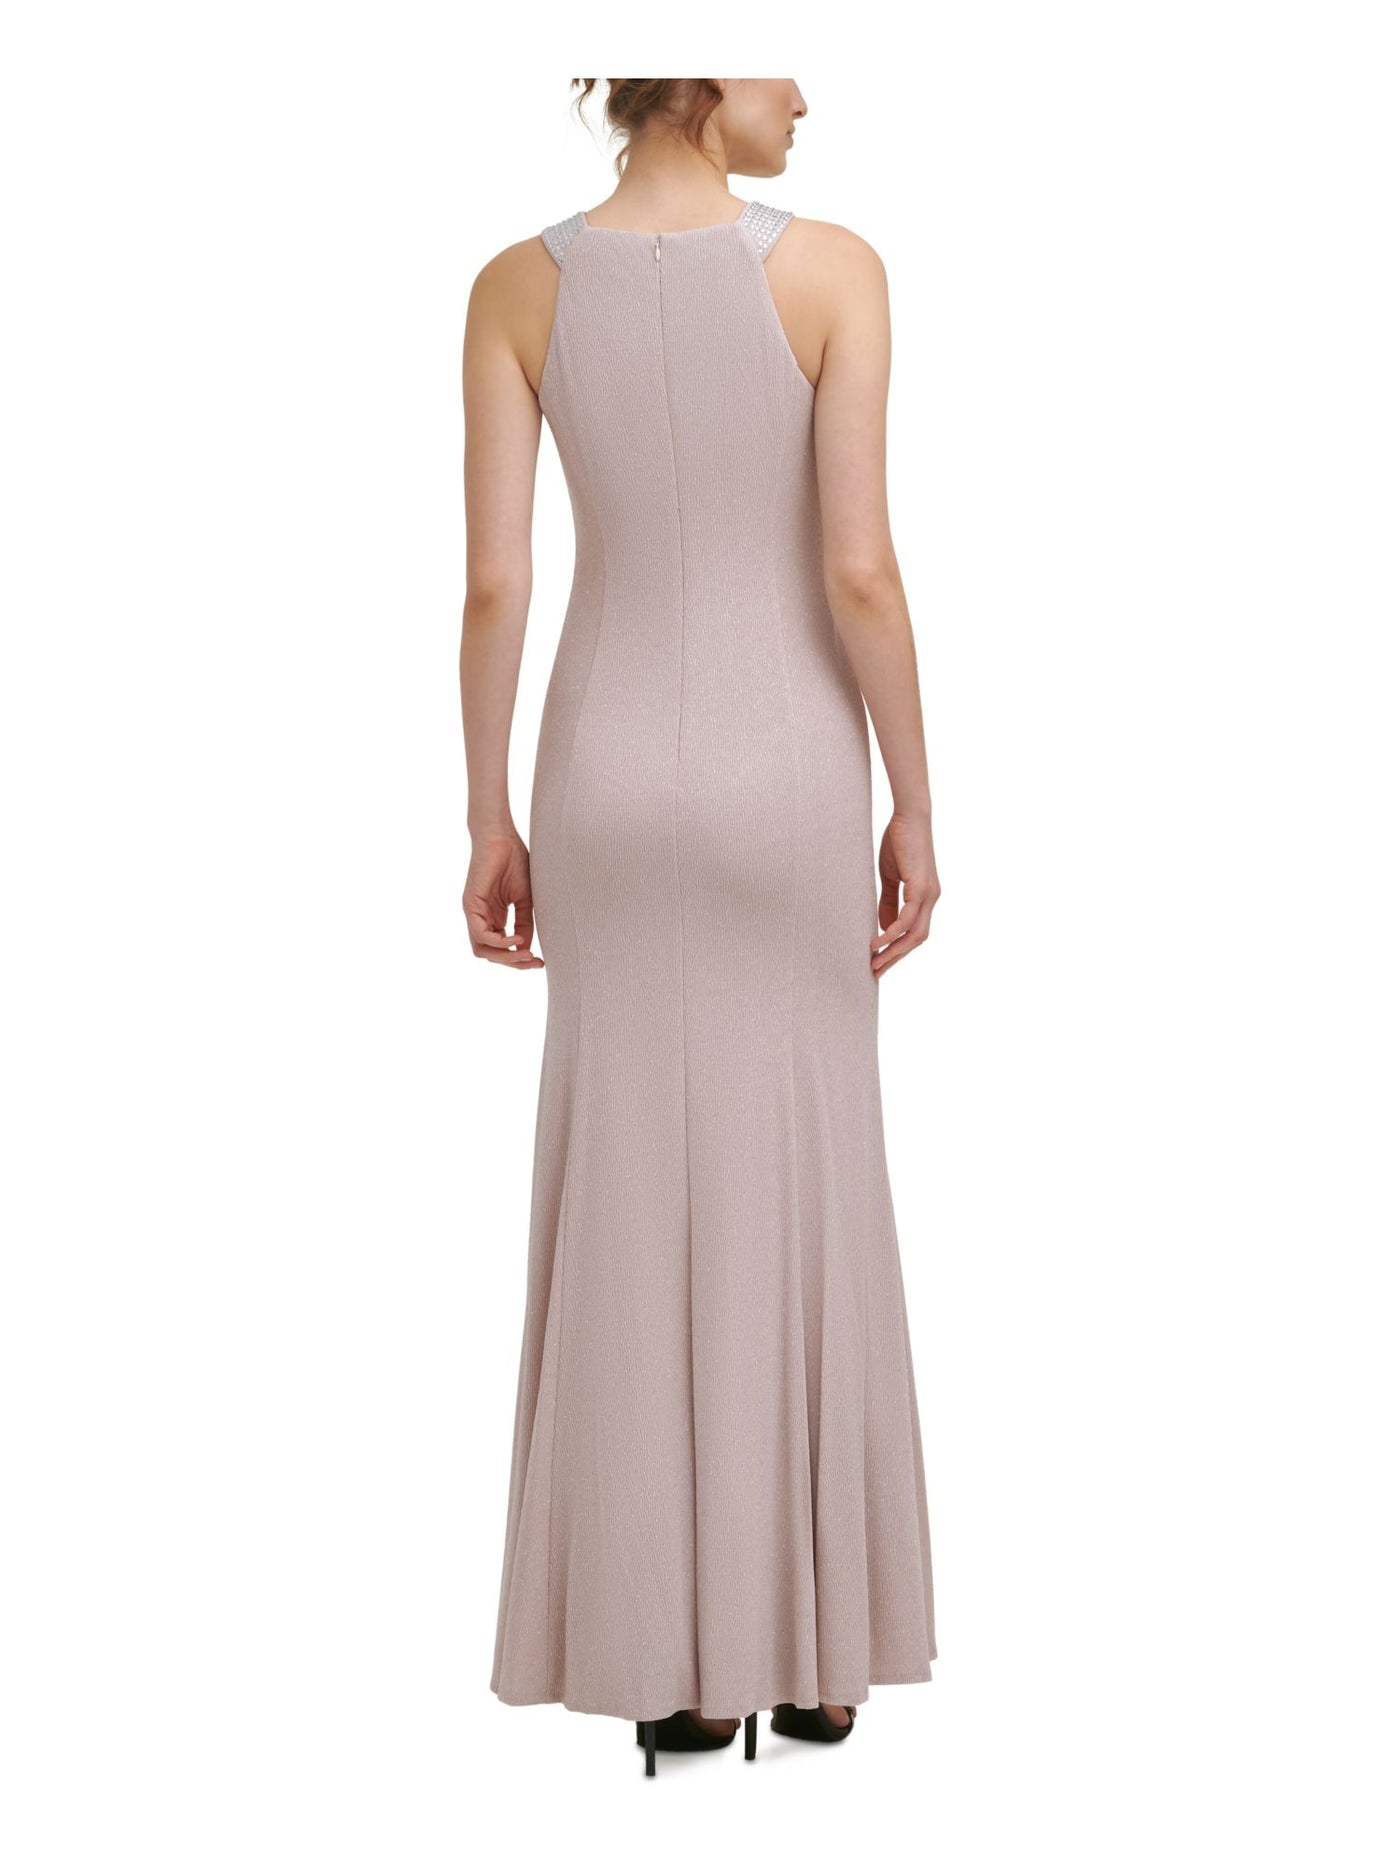 CALVIN KLEIN Womens Pink Stretch Zippered Embellished Halter Full-Length Evening Gown Dress 16